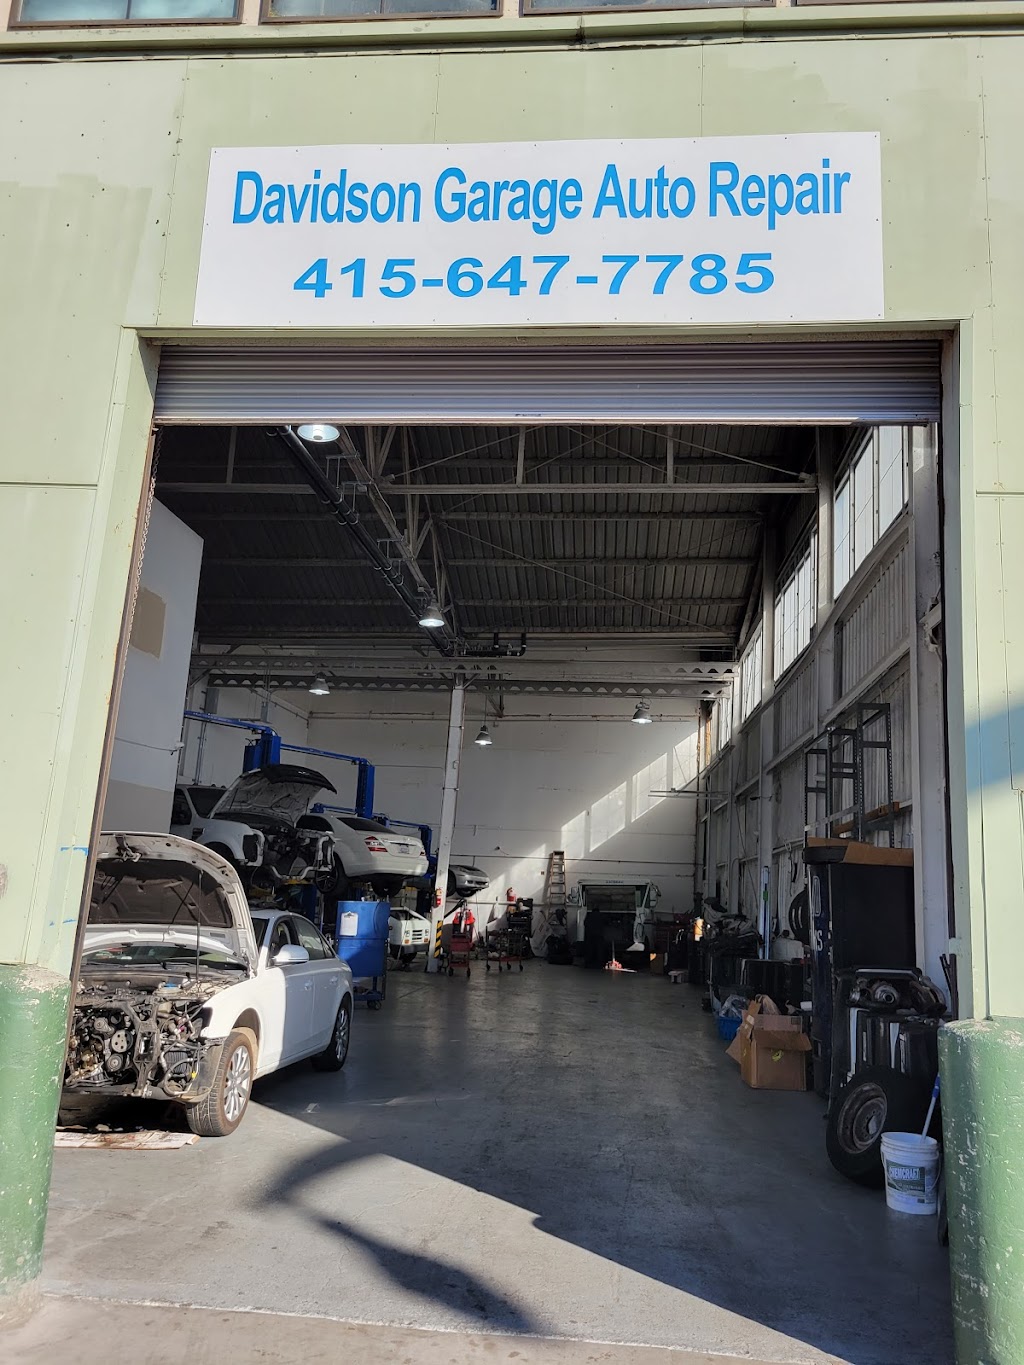 Davidson Garage | 3255 3rd St Unit C, San Francisco, CA 94124, USA | Phone: (415) 647-7785